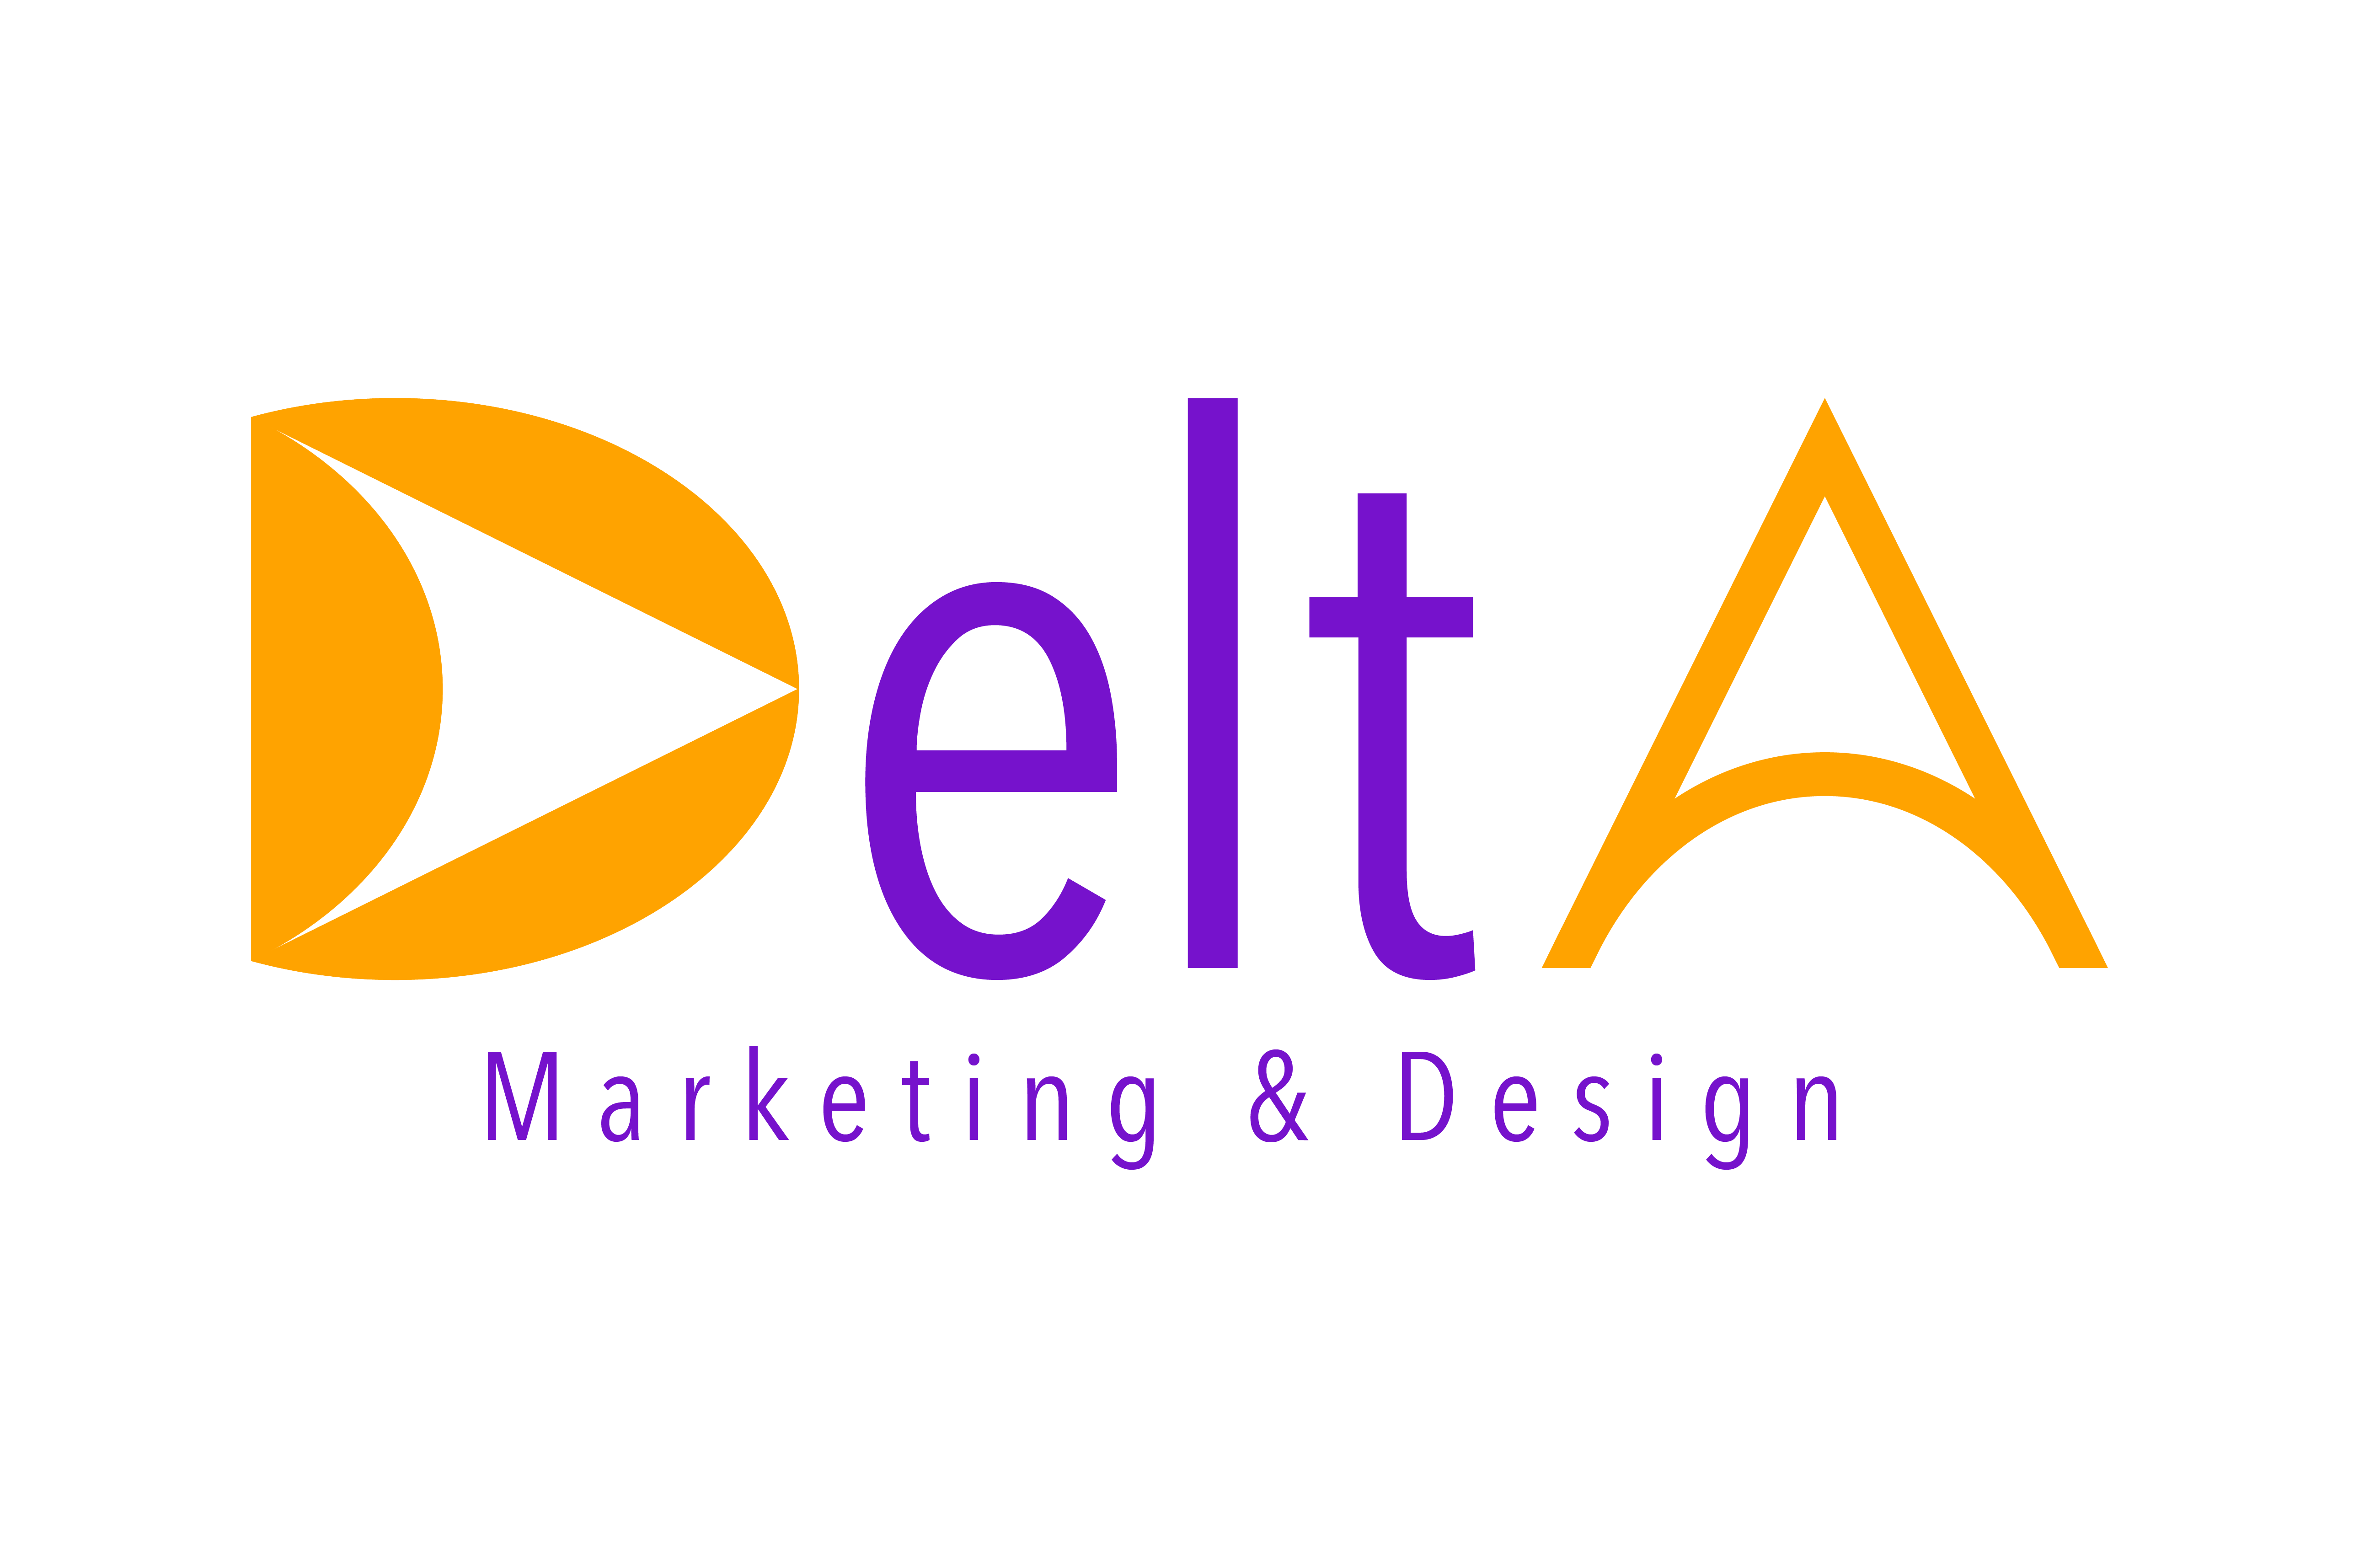 Delta Marketing & Design